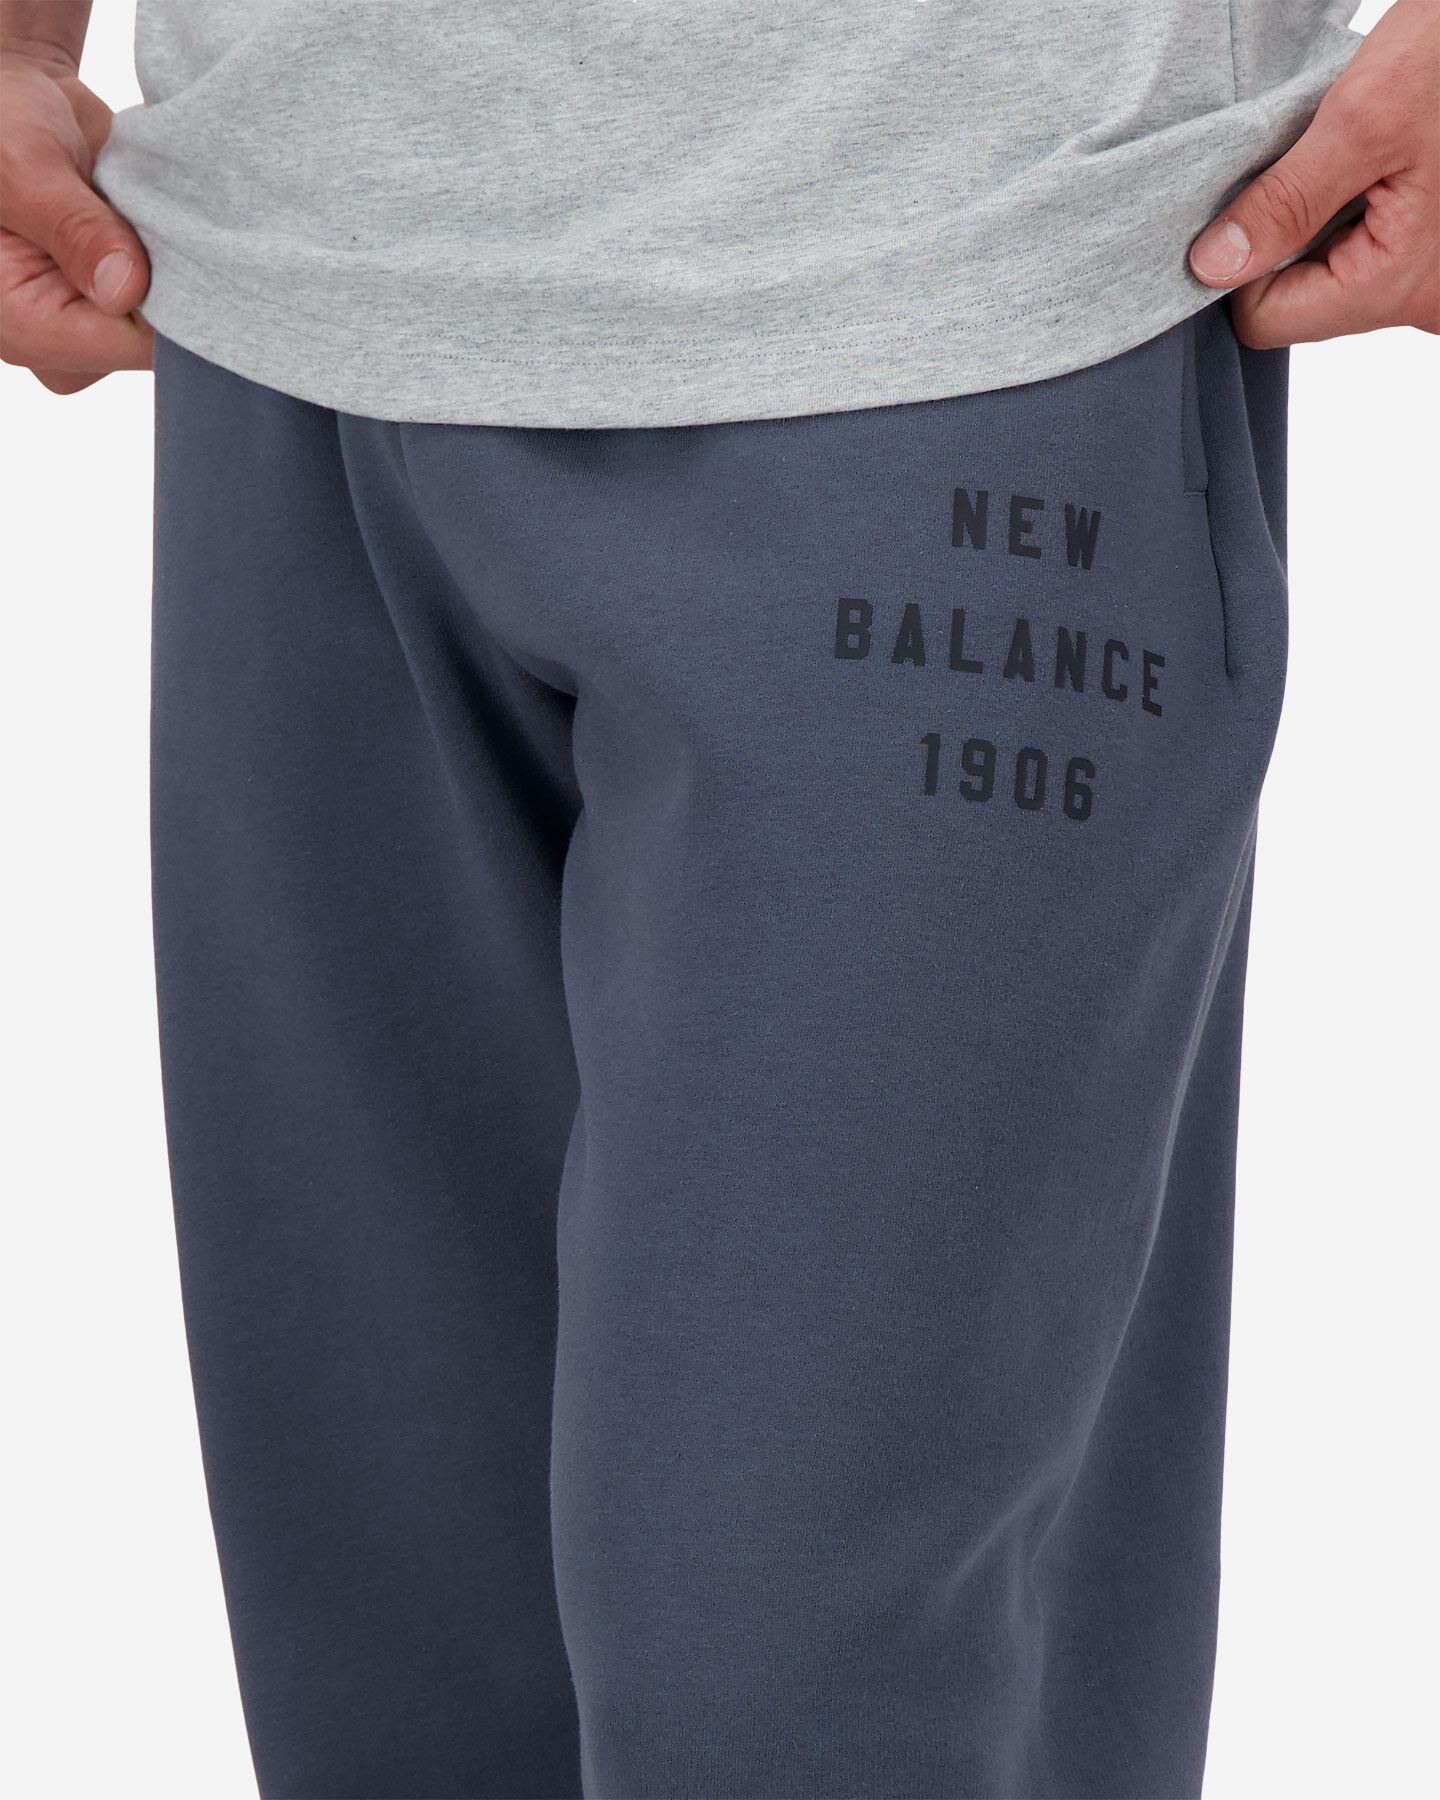  Pantalone NEW BALANCE CLASSIC M S5652321|-|S* scatto 3